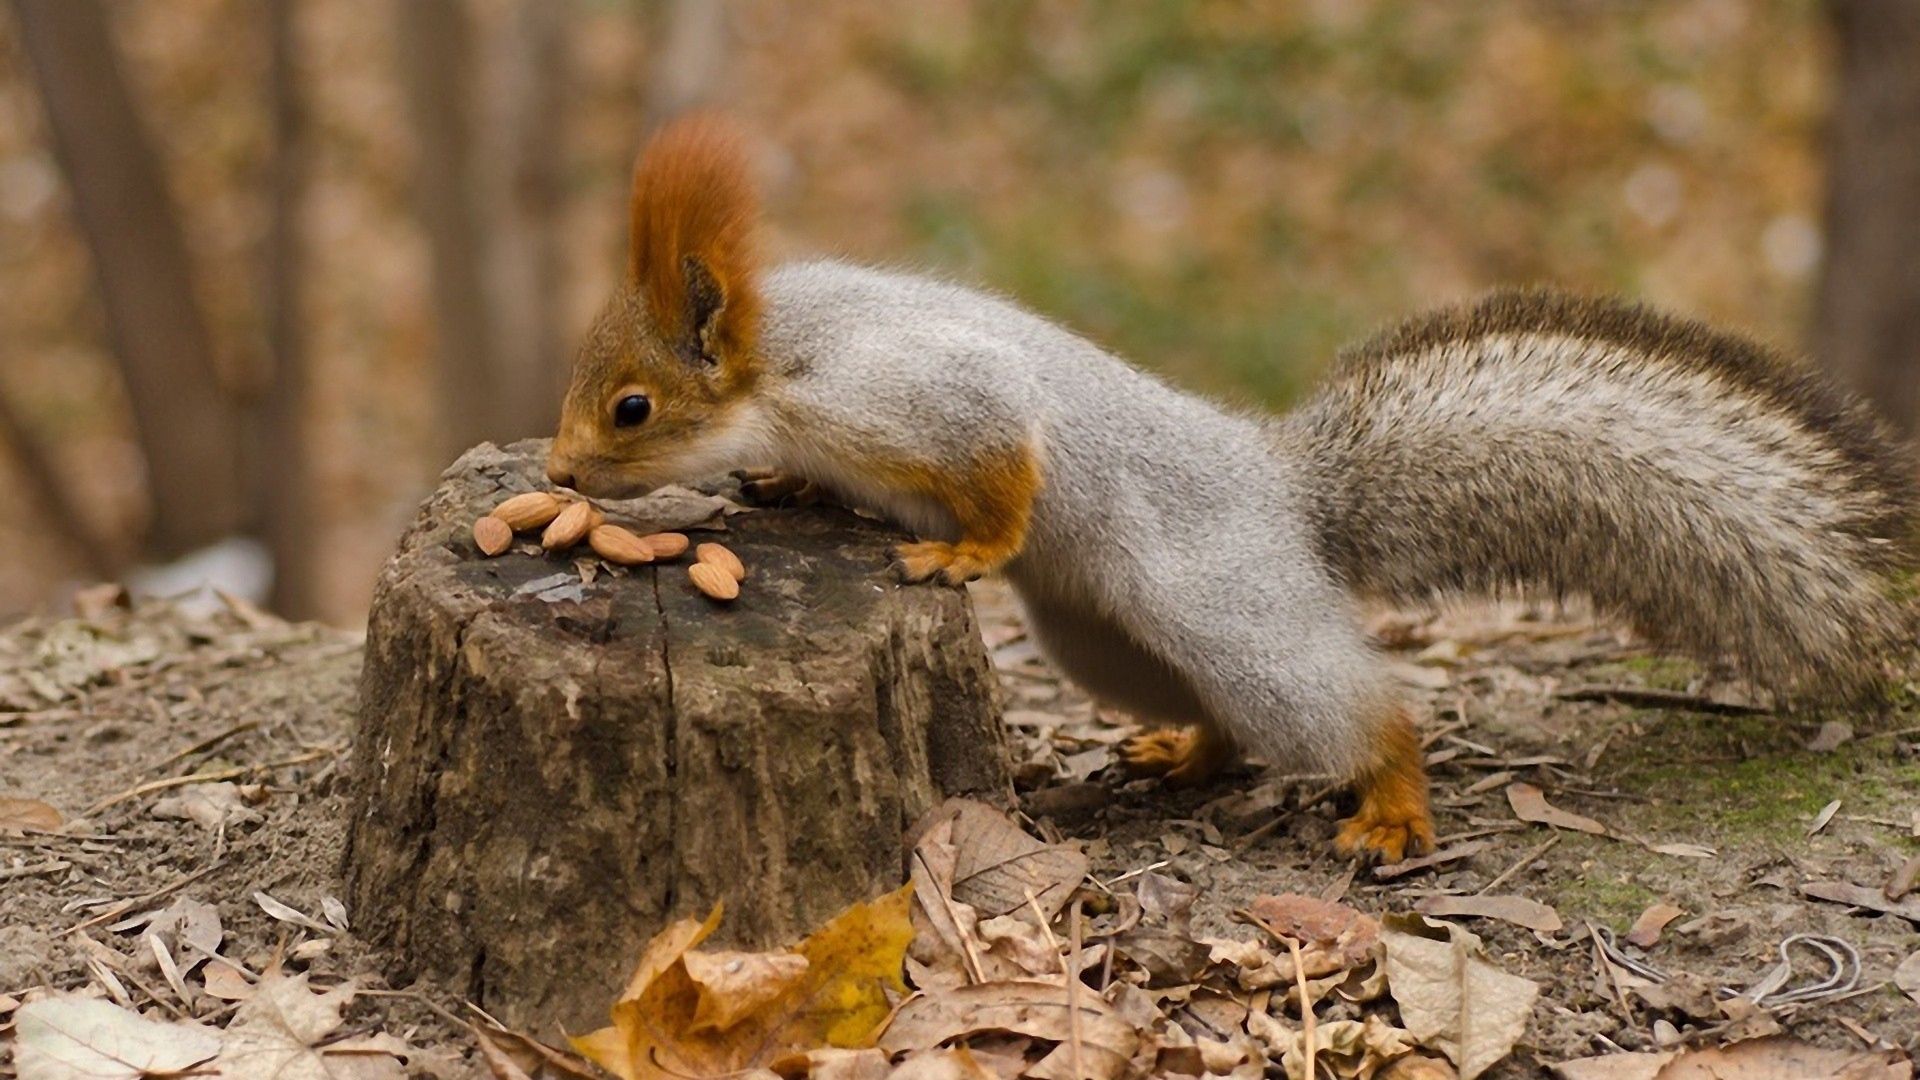 Squirrel In Autumn Forest Pictures